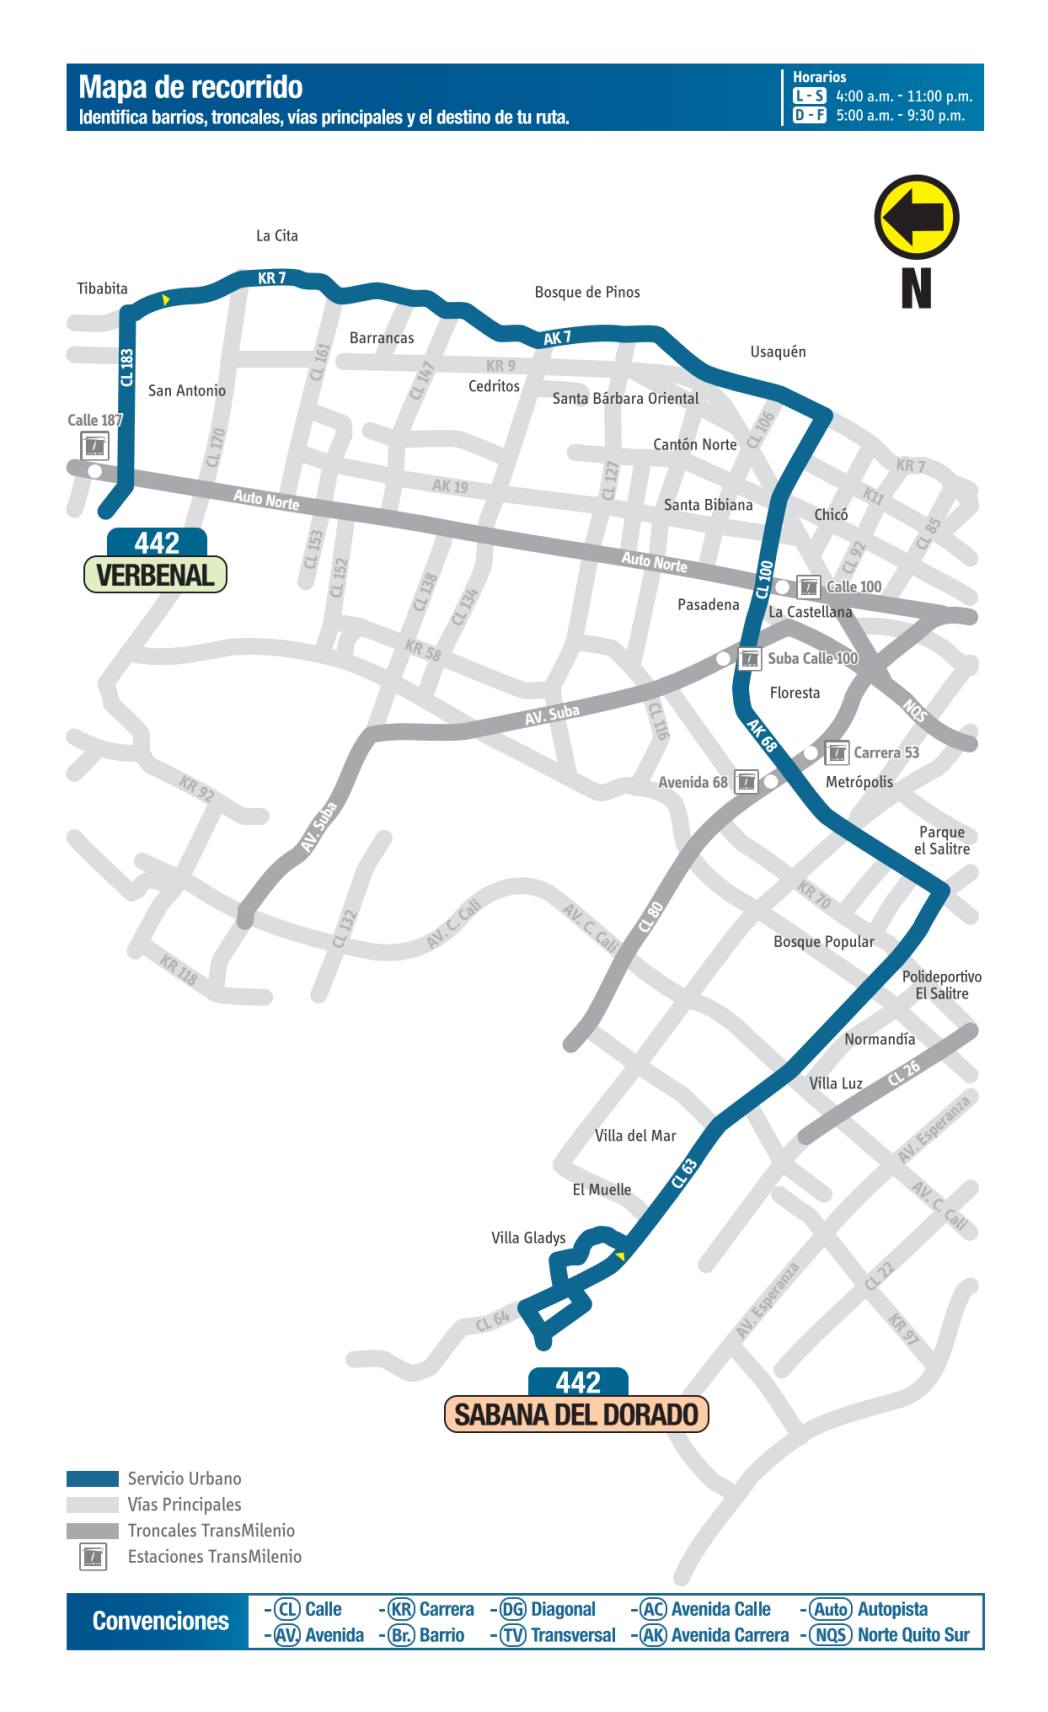 442 Verbenal - Sabana del Dorado, mapa bus urbano Bogotá